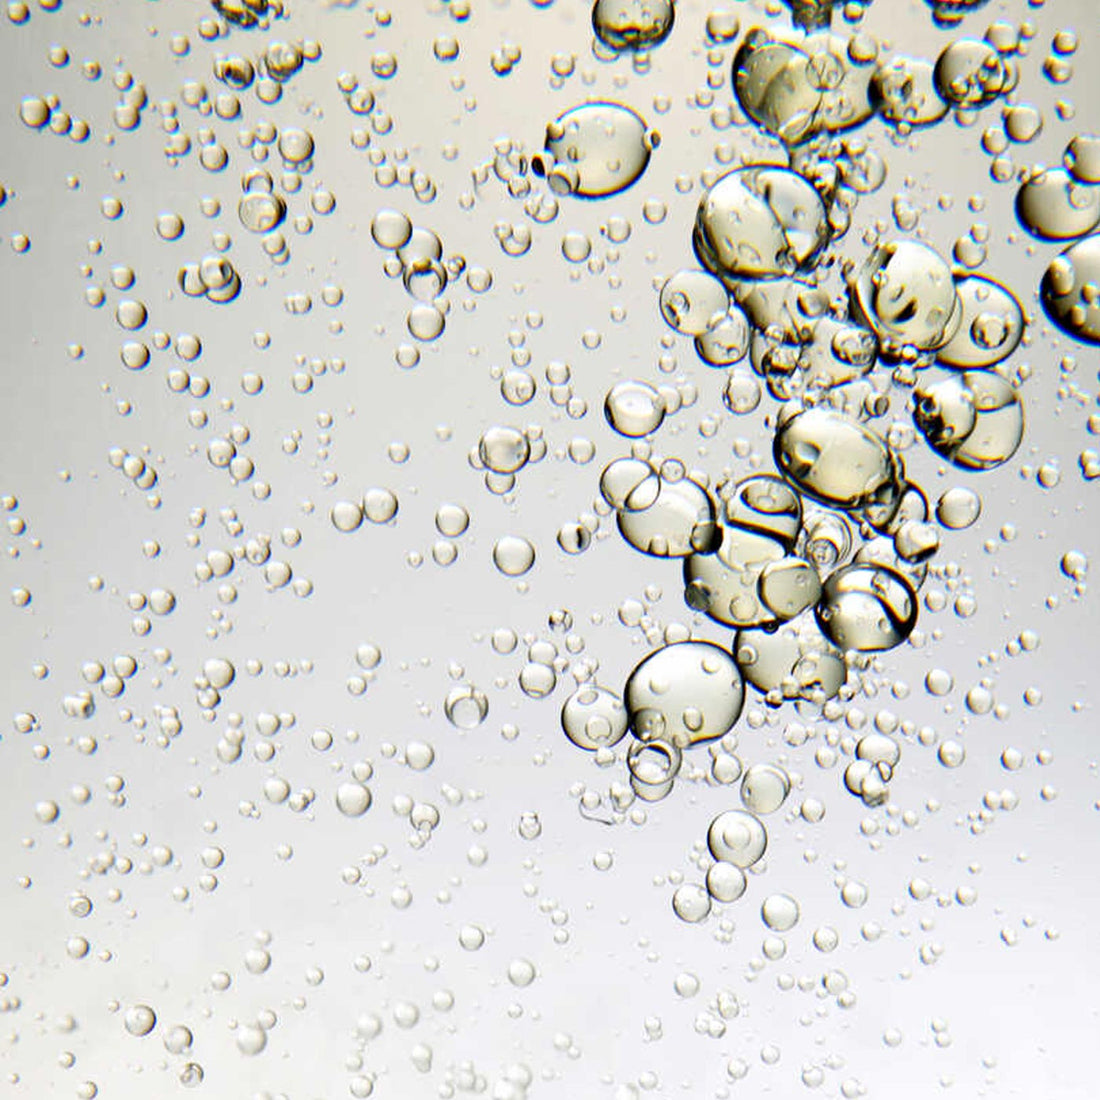 micellen in wateroplosbare supplementen